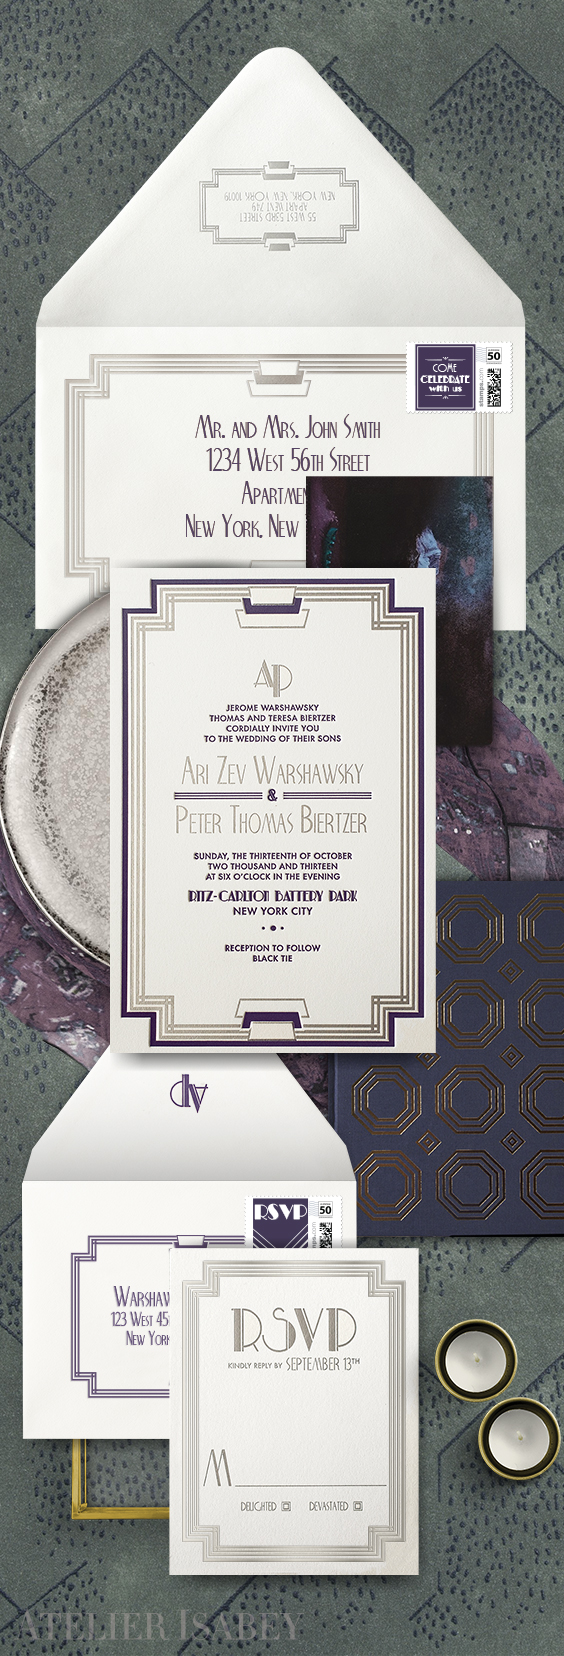 Silver and purple New York Art Deco wedding invitation